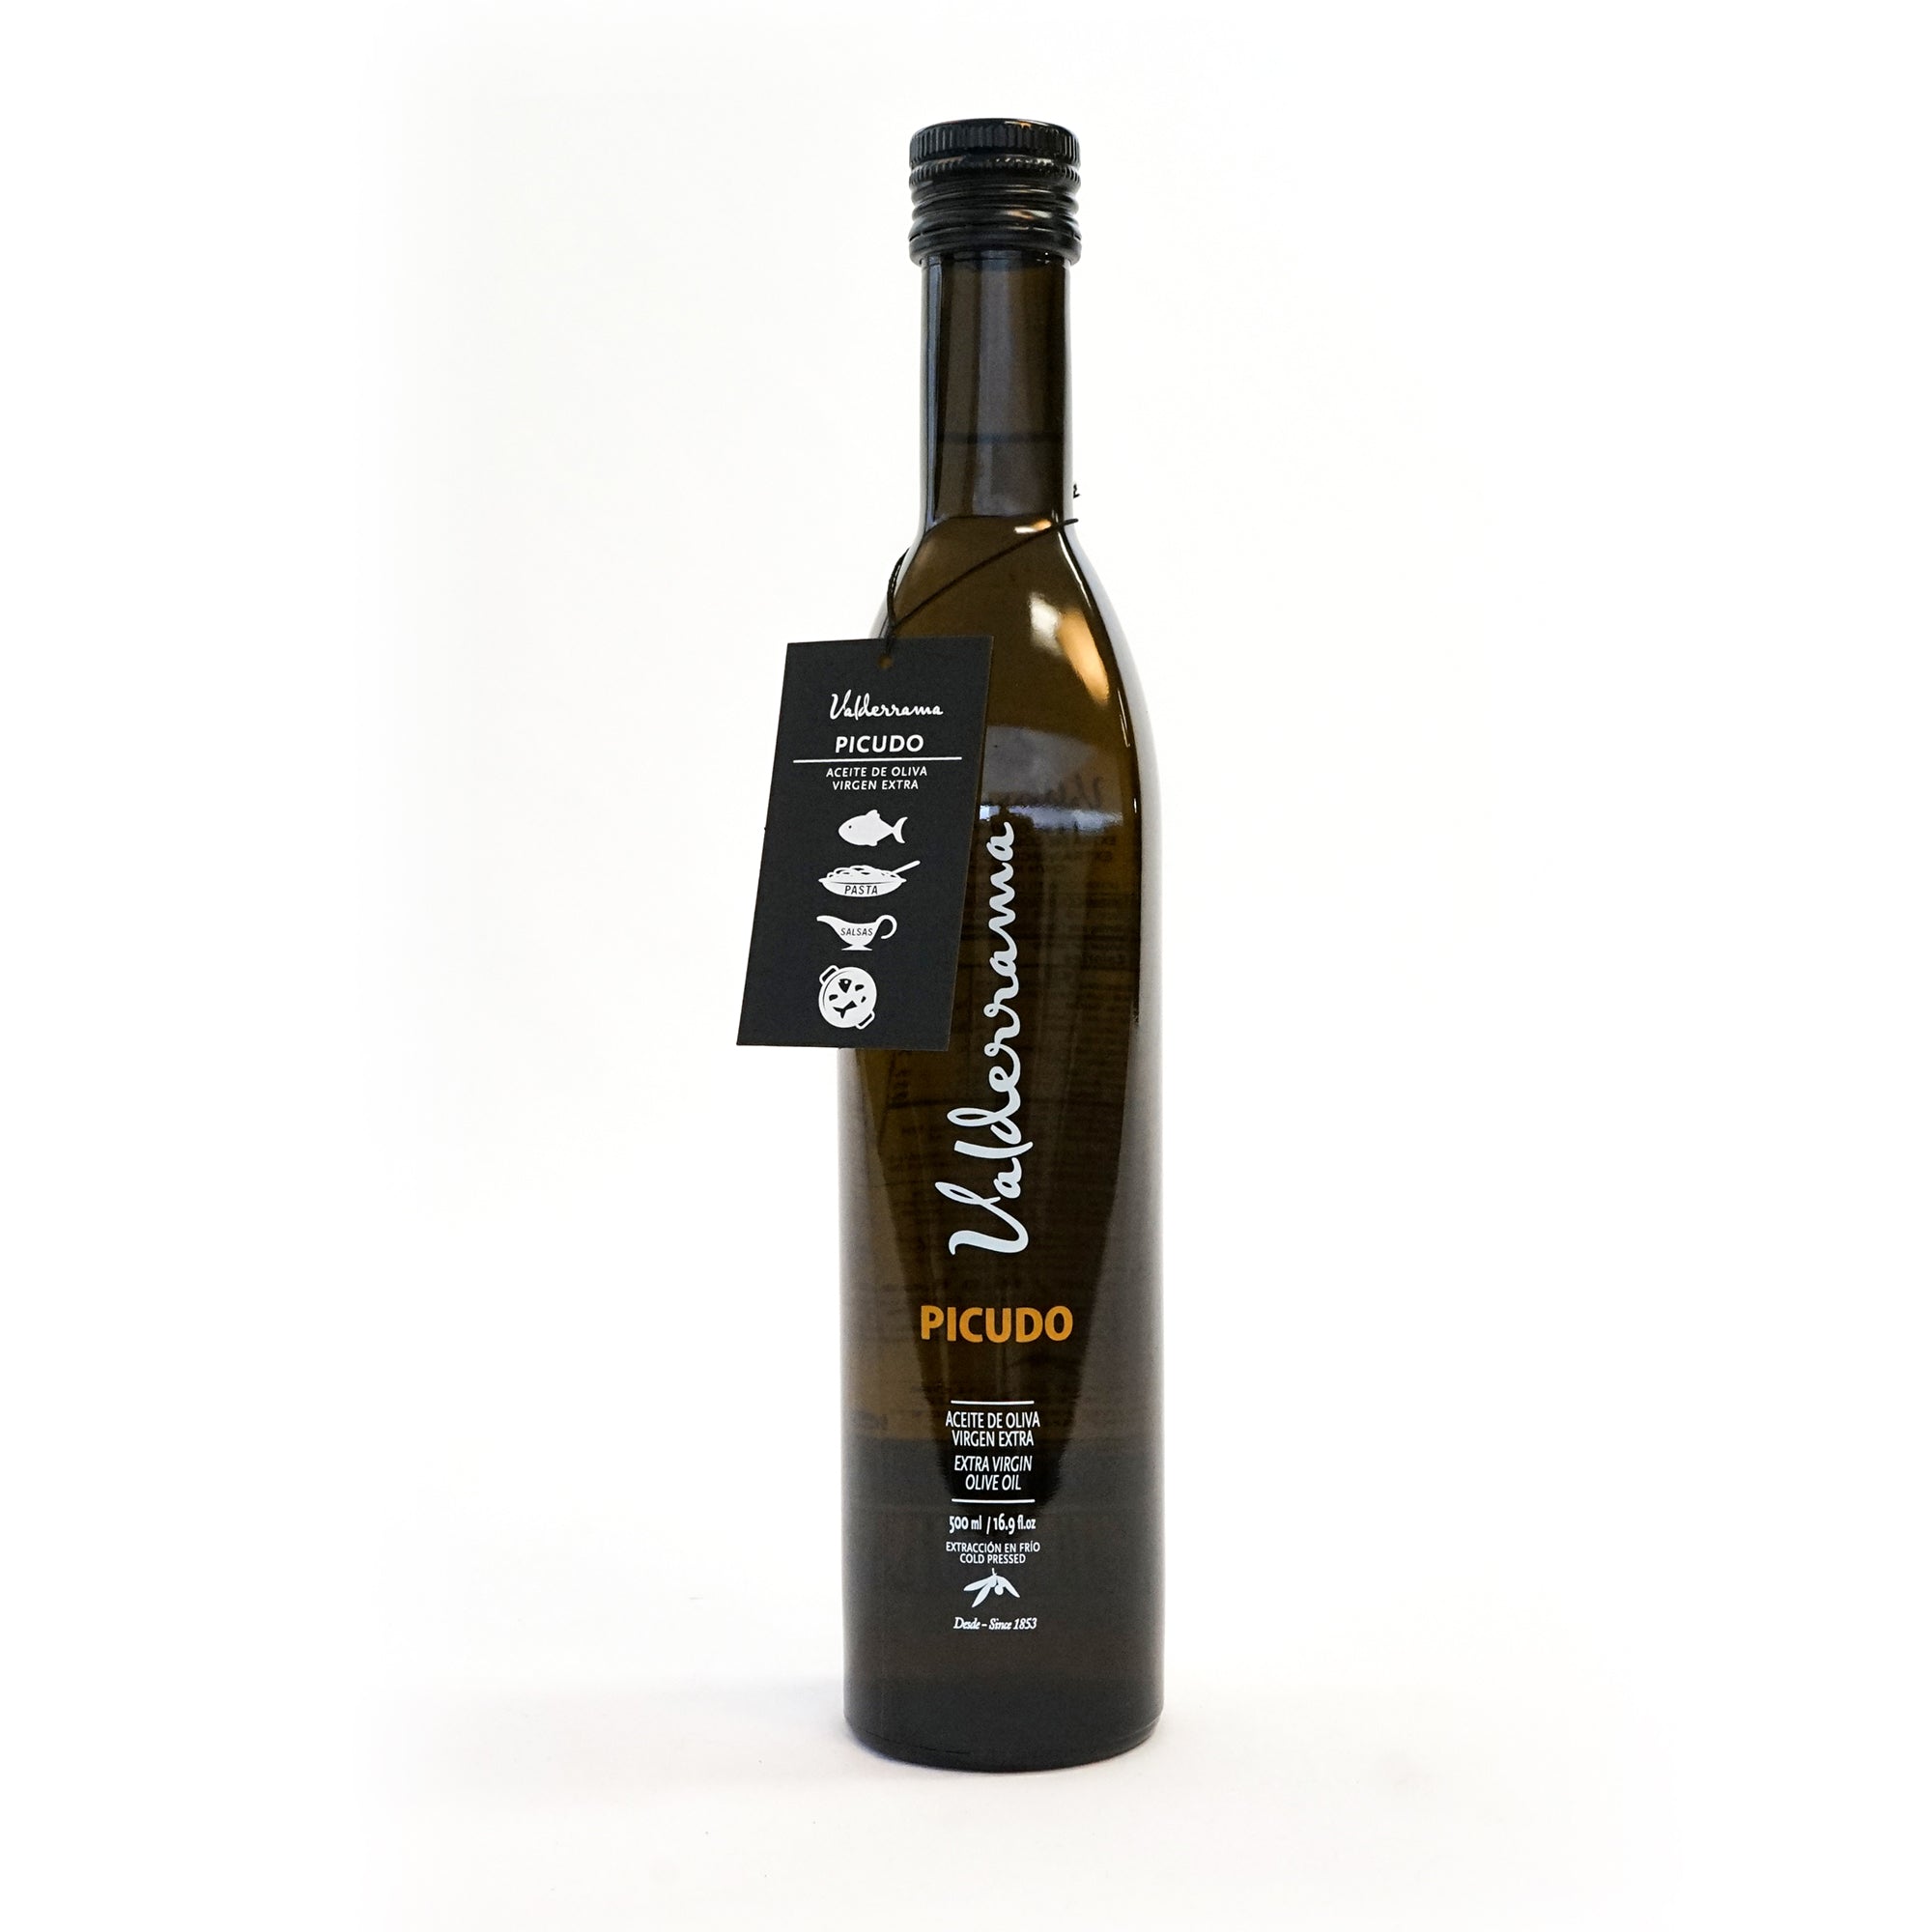 Picudo Extra Virgin Olive Oil Valderrama